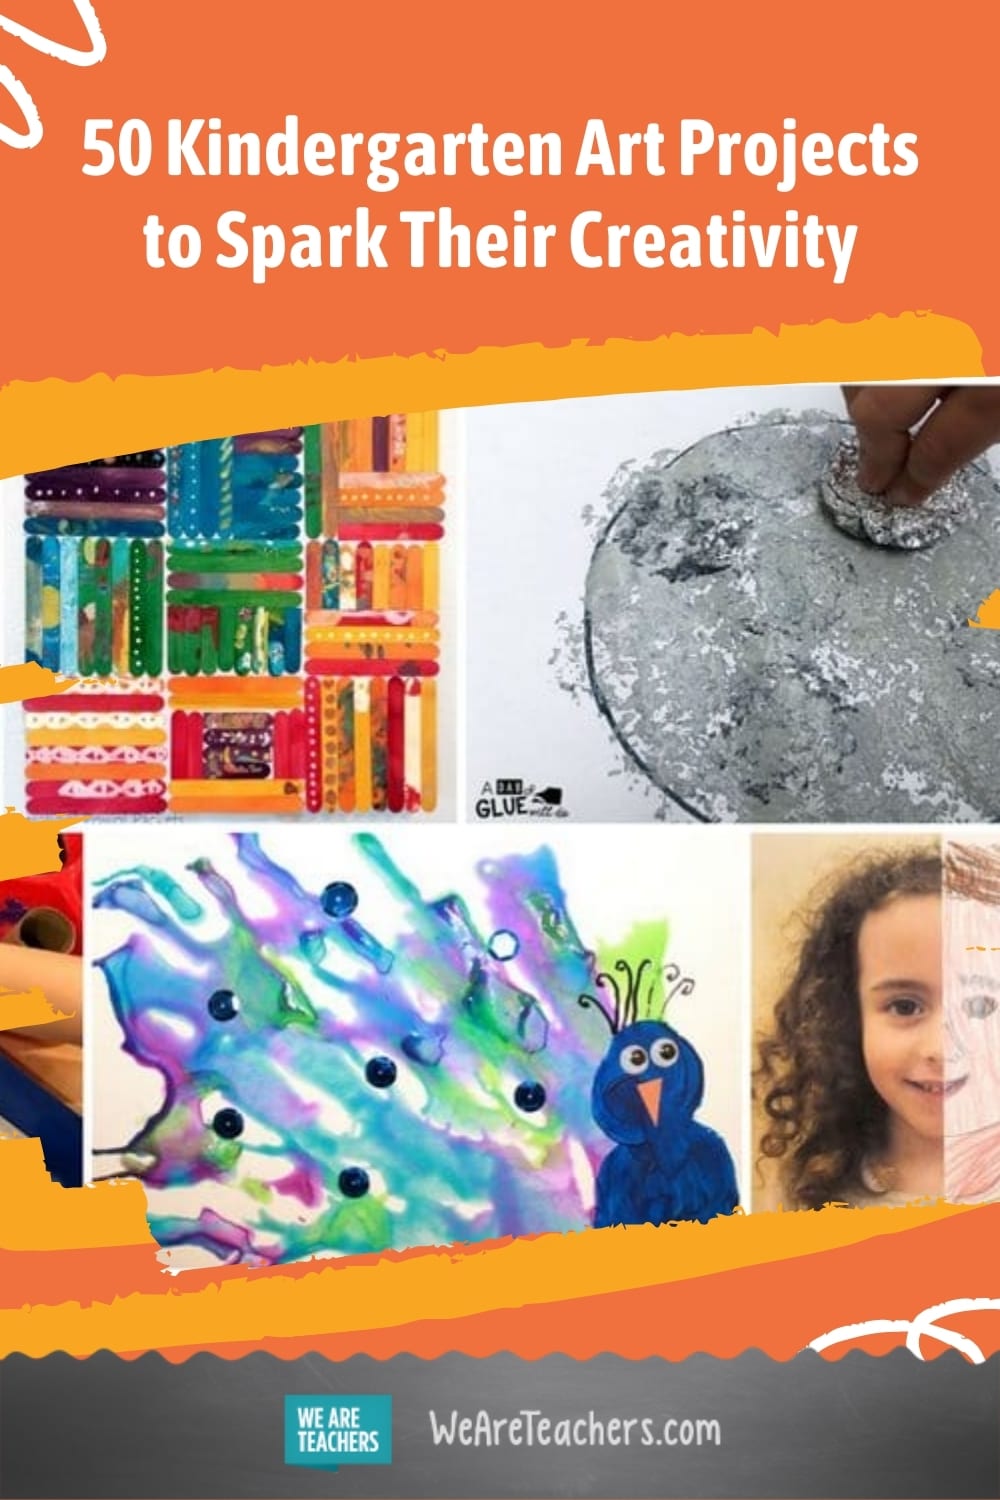 50 Kindergarten Art Projects to Spark Their Creativity